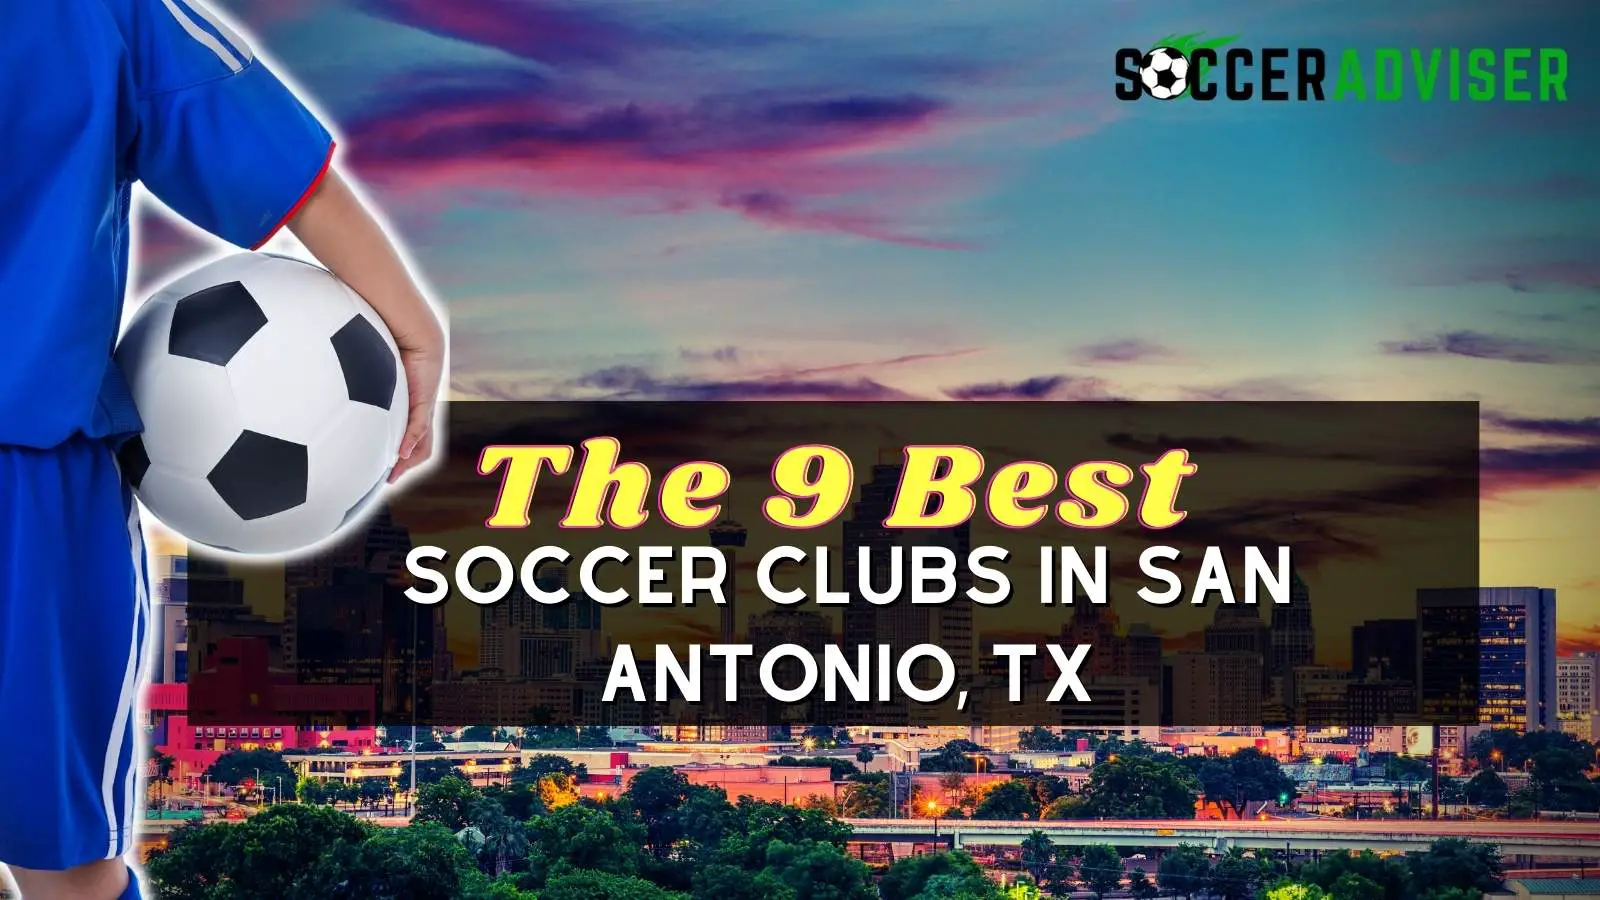 The 9 Best Soccer Clubs in San Antonio, TX